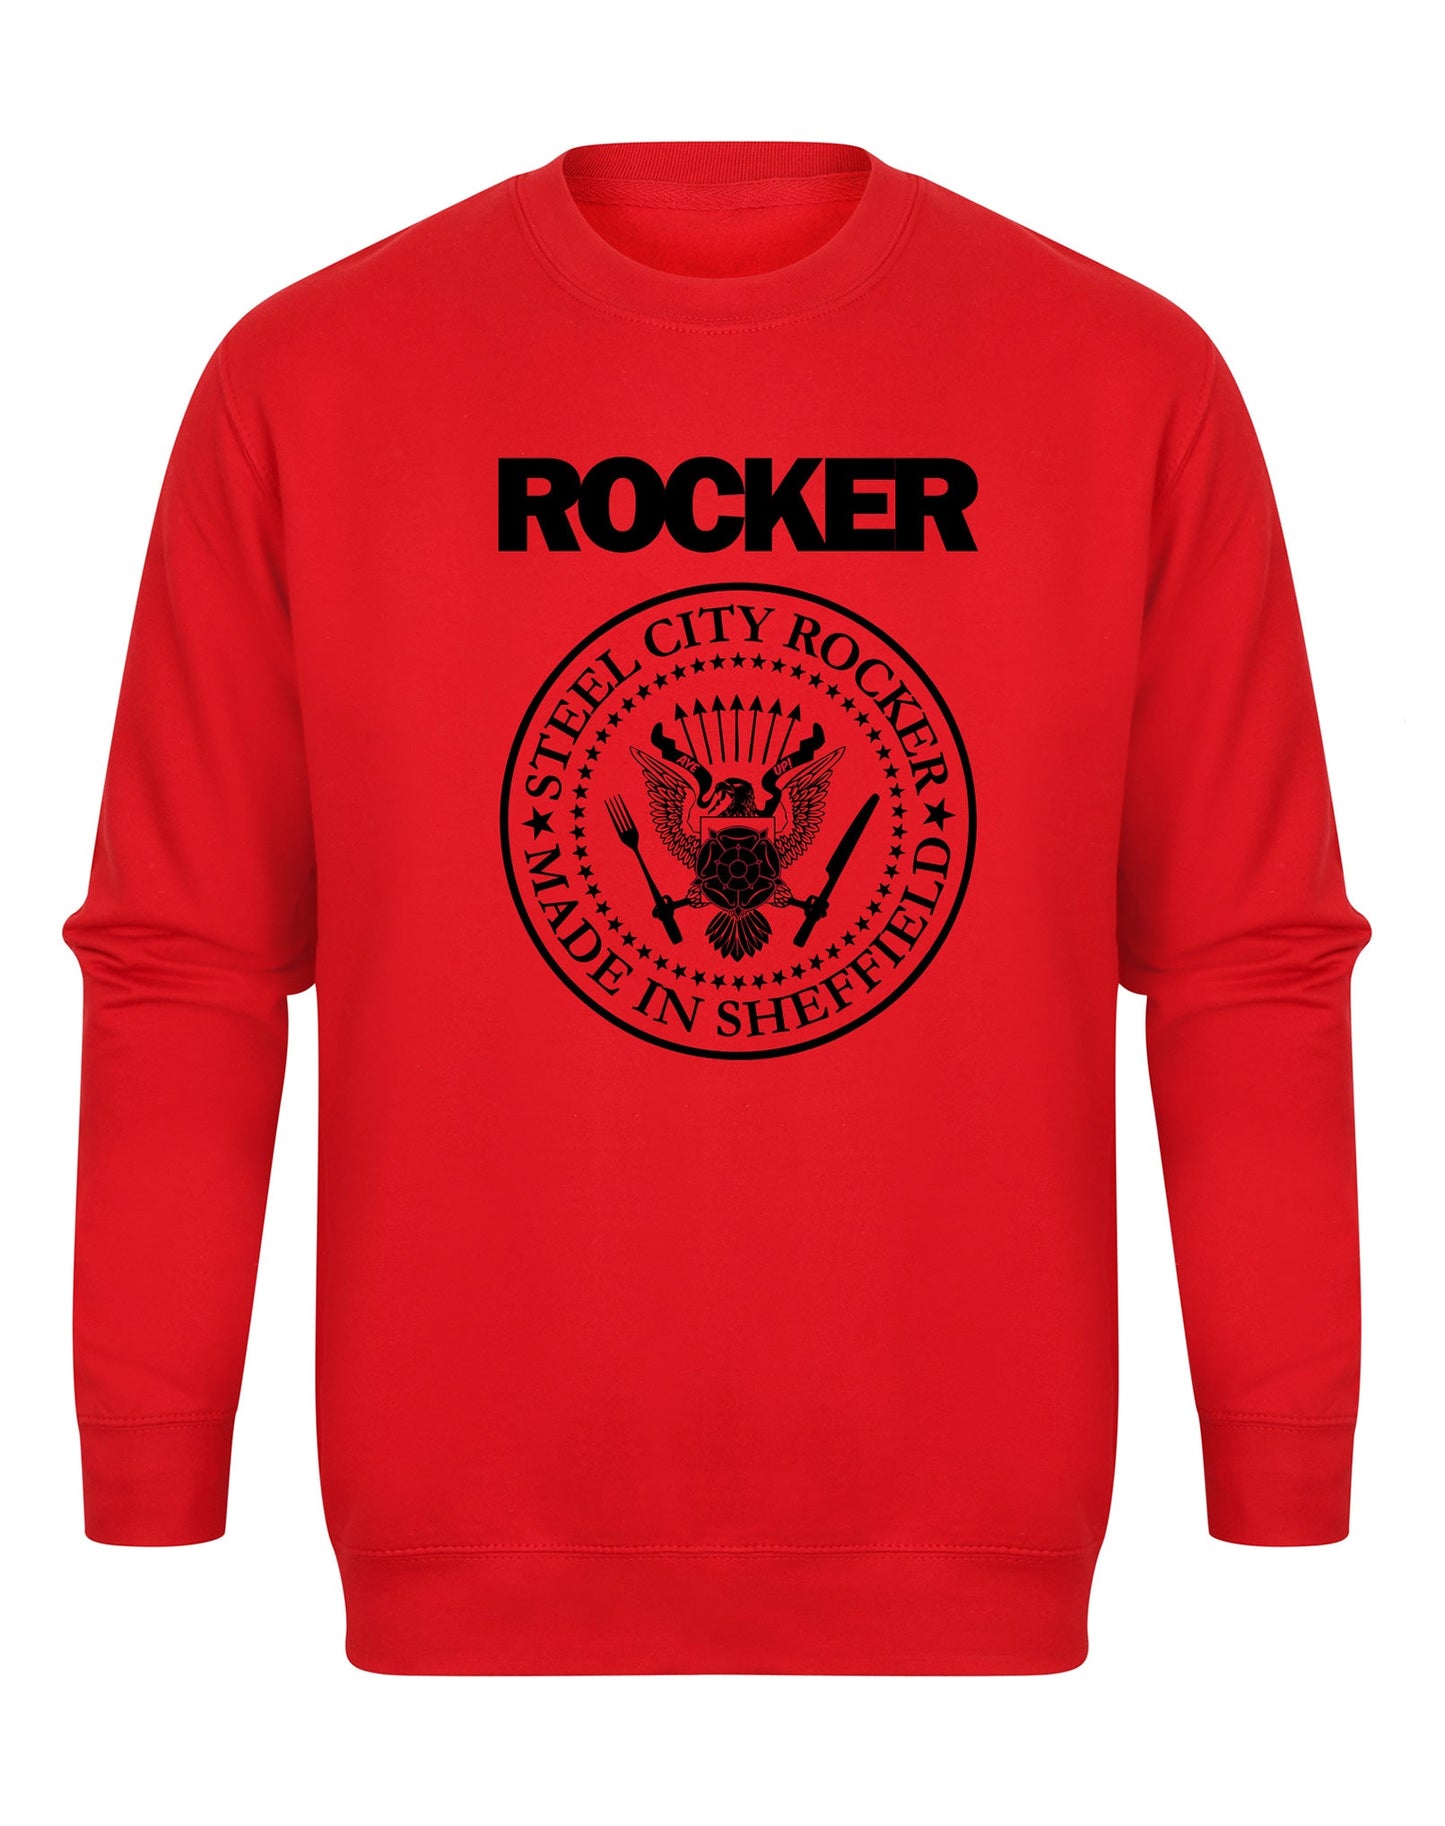 Steel City Rocker - Ramones design - unisex fit sweatshirt - various colours - Dirty Stop Outs